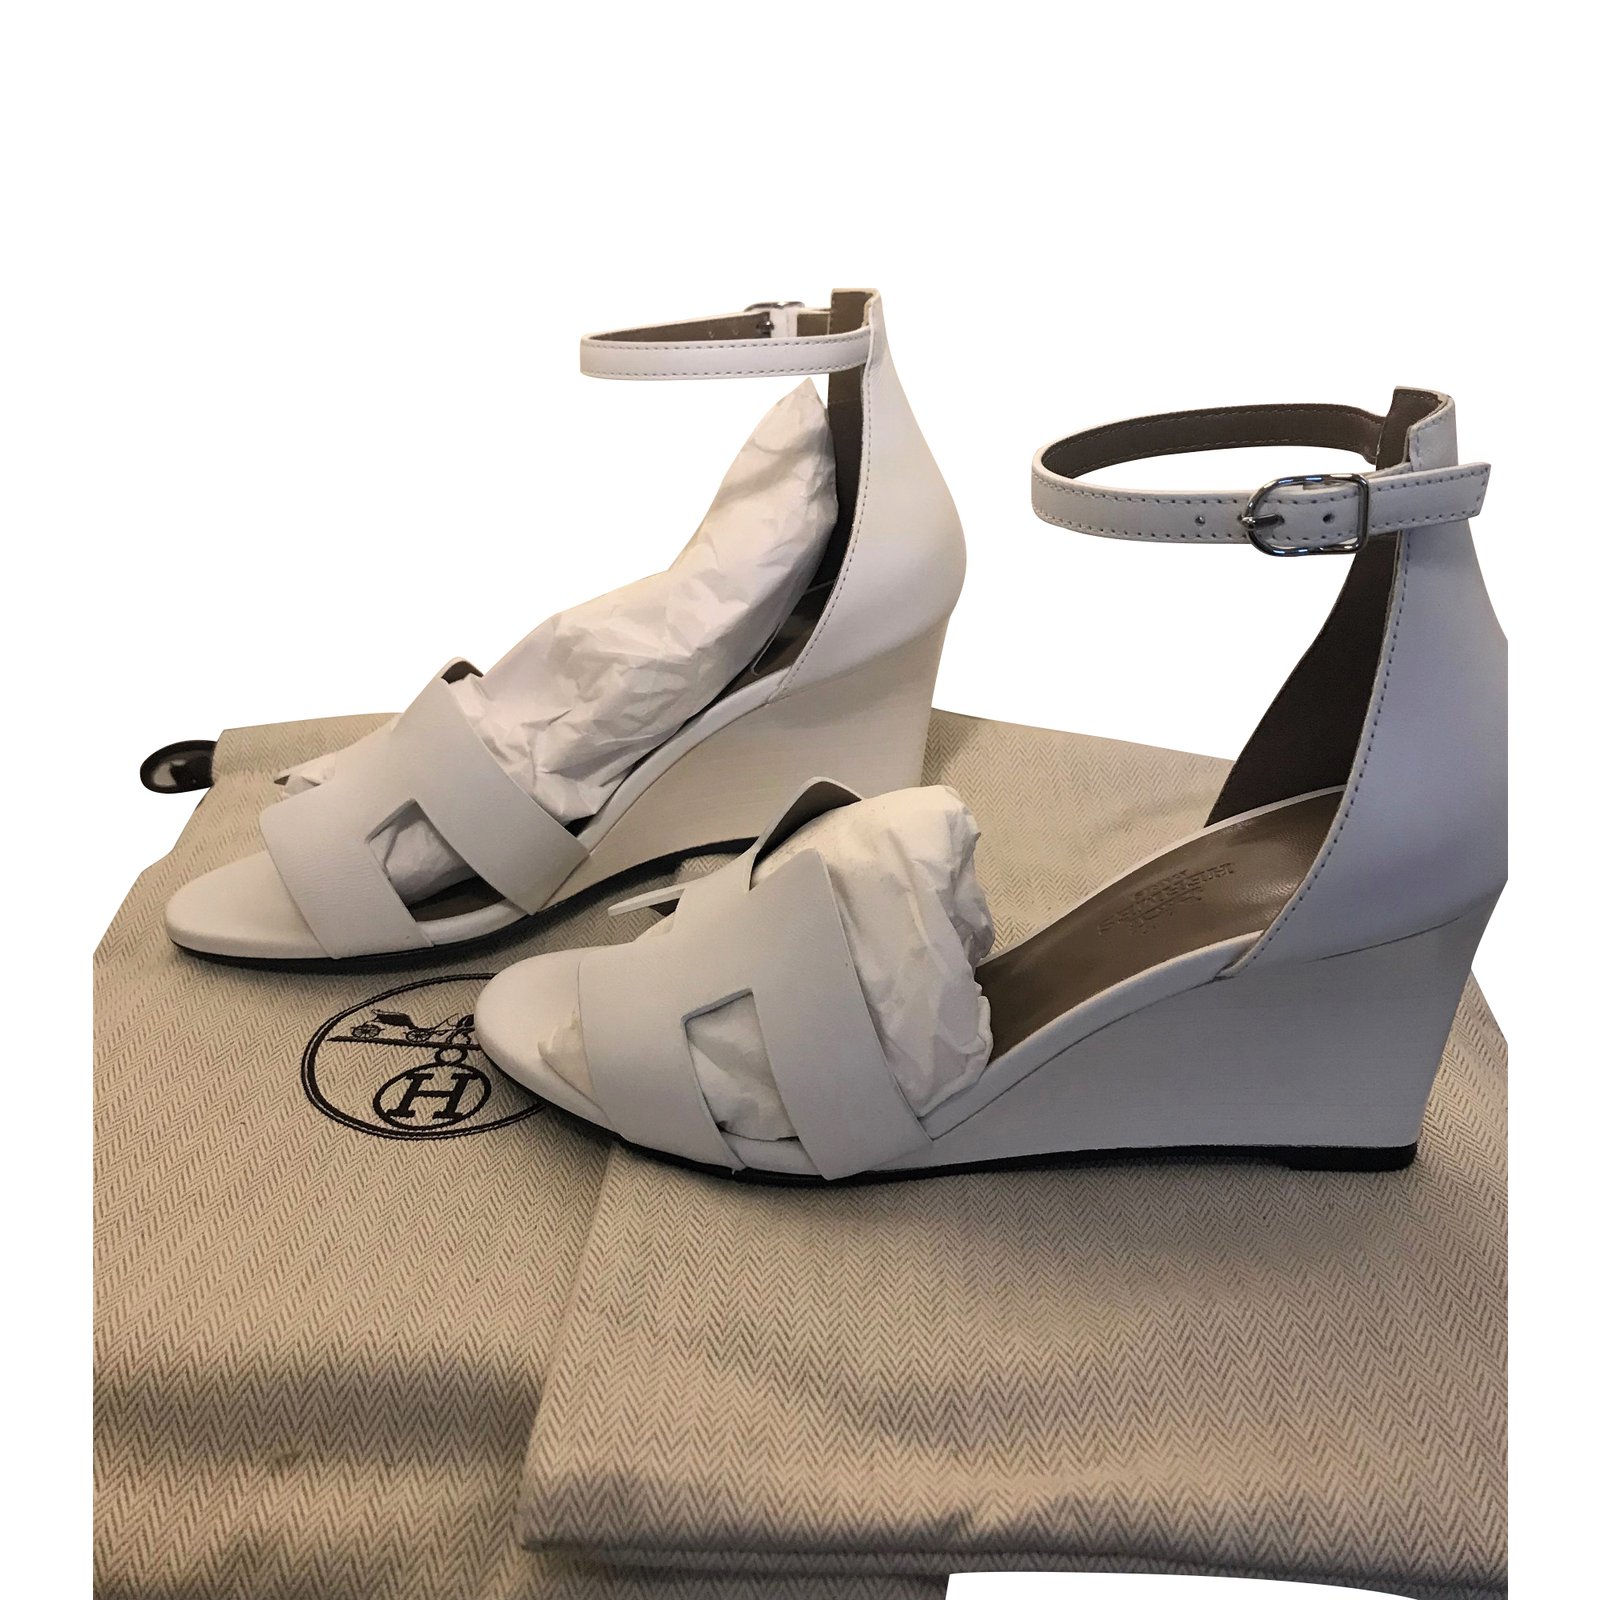 Herm s Hermes  Legend sandal  Sandals  Leather White ref 